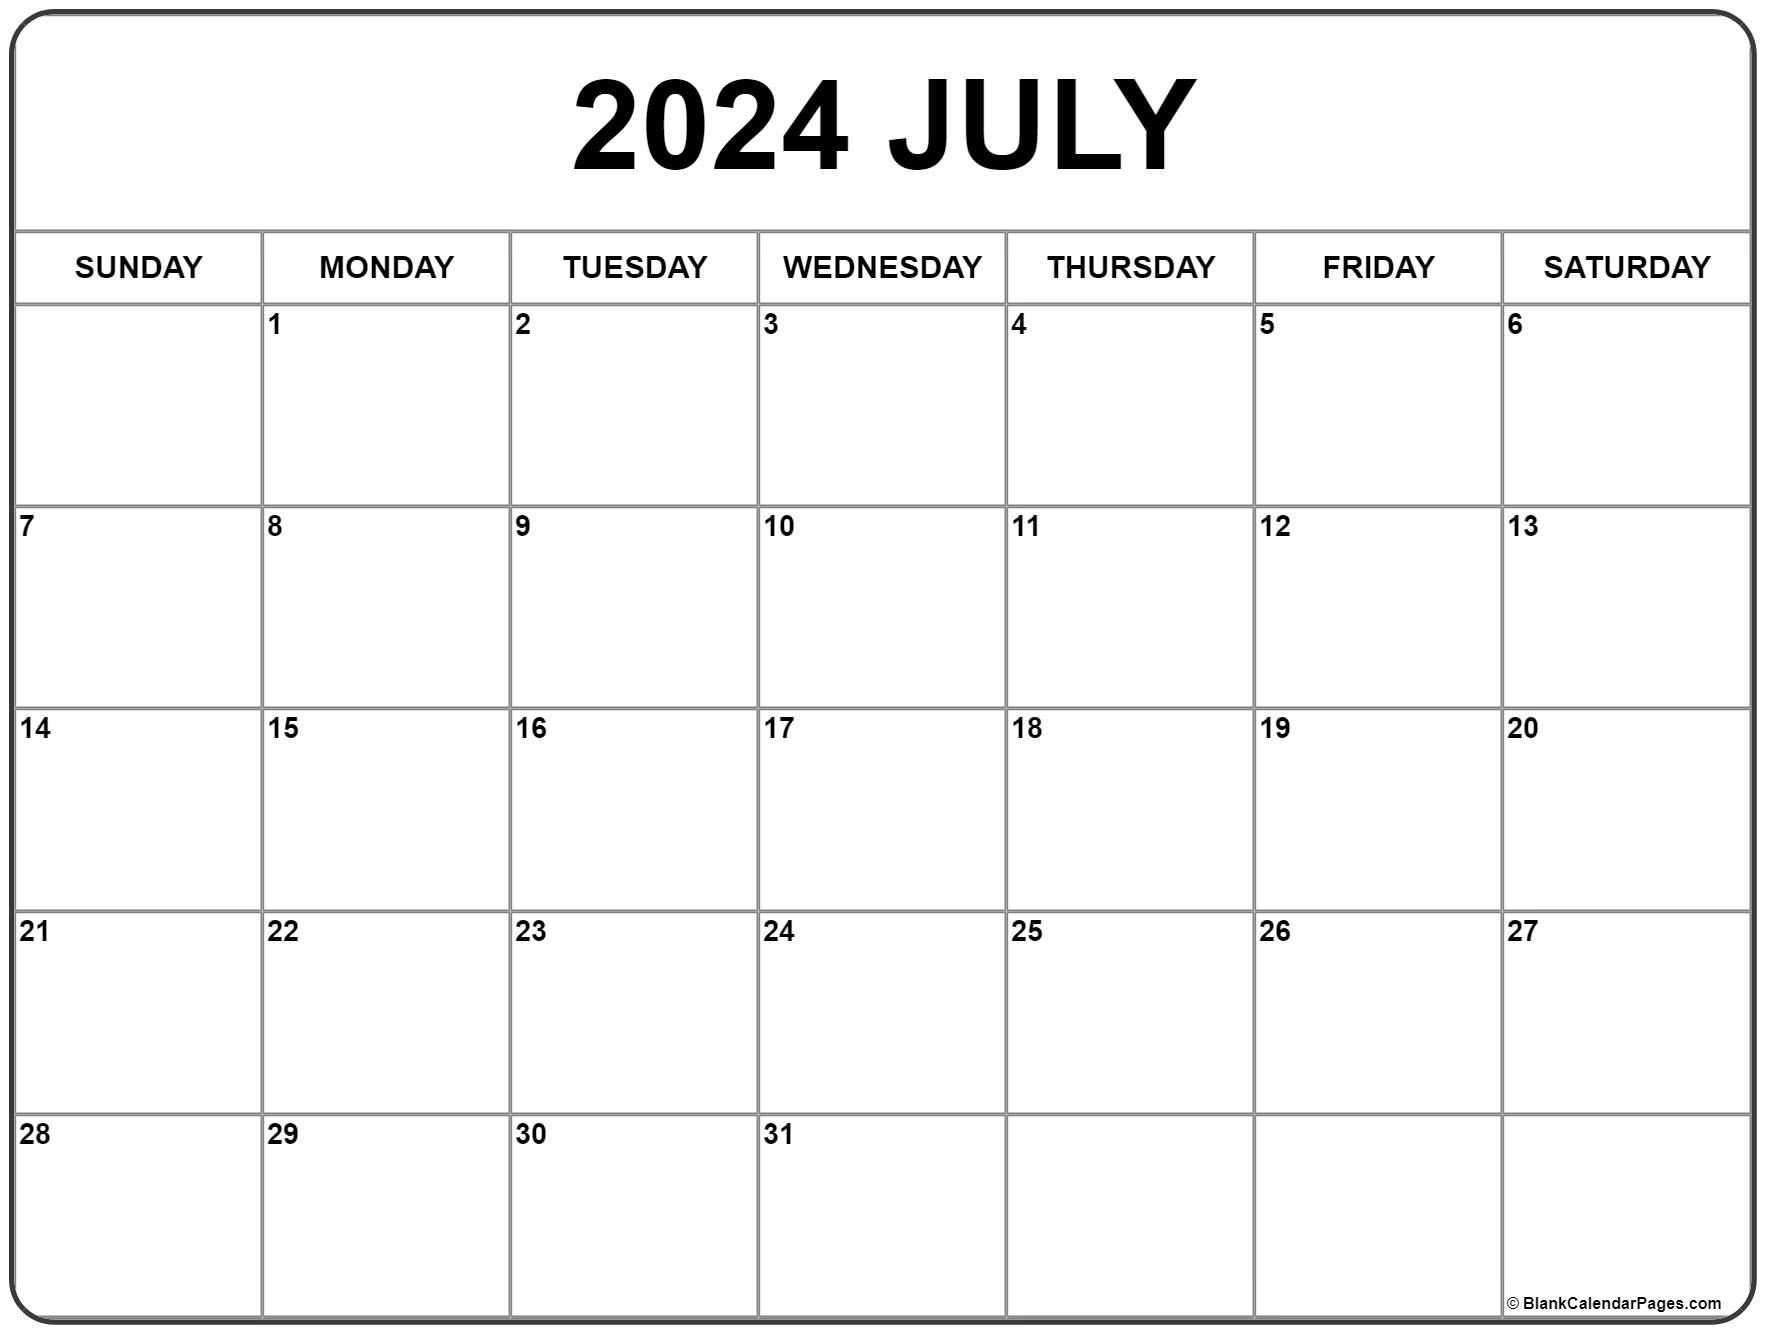 July 2024 Calendar | Free Printable Calendar pertaining to Free July Calendar 2024